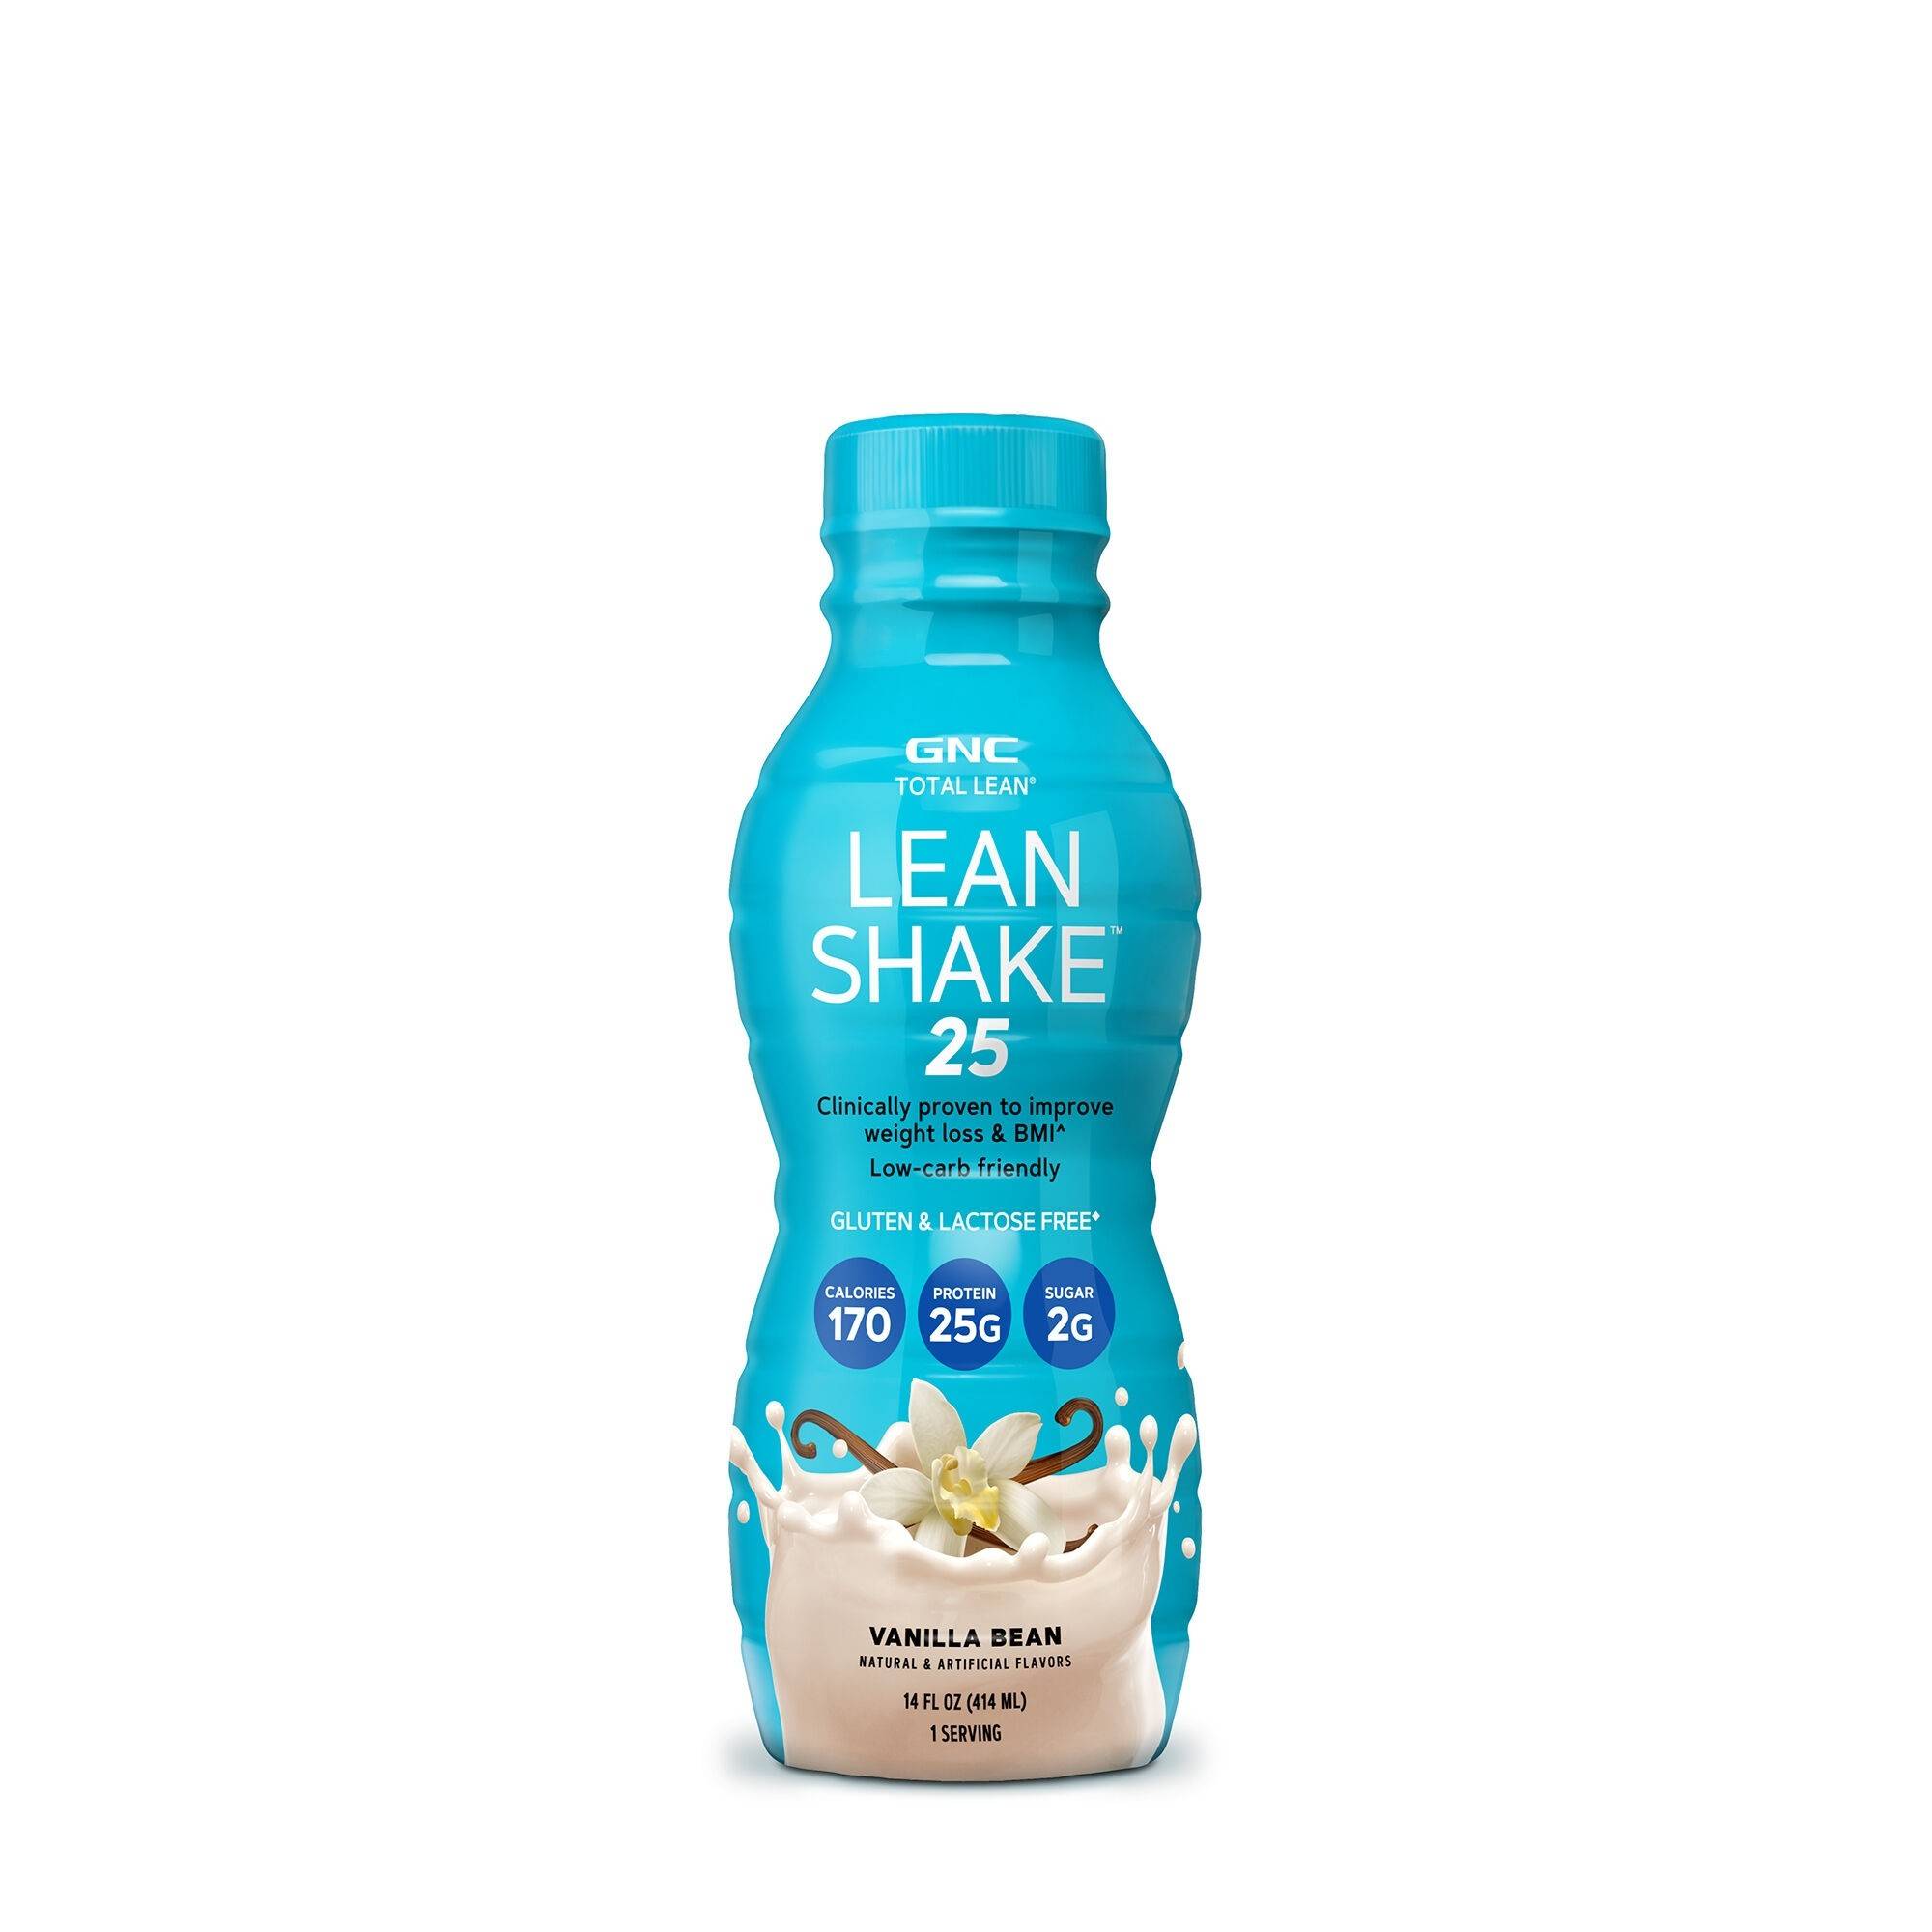 Total lean lean shake 25, shake proteic rtd cu aroma de vanilie, 414ml - gnc